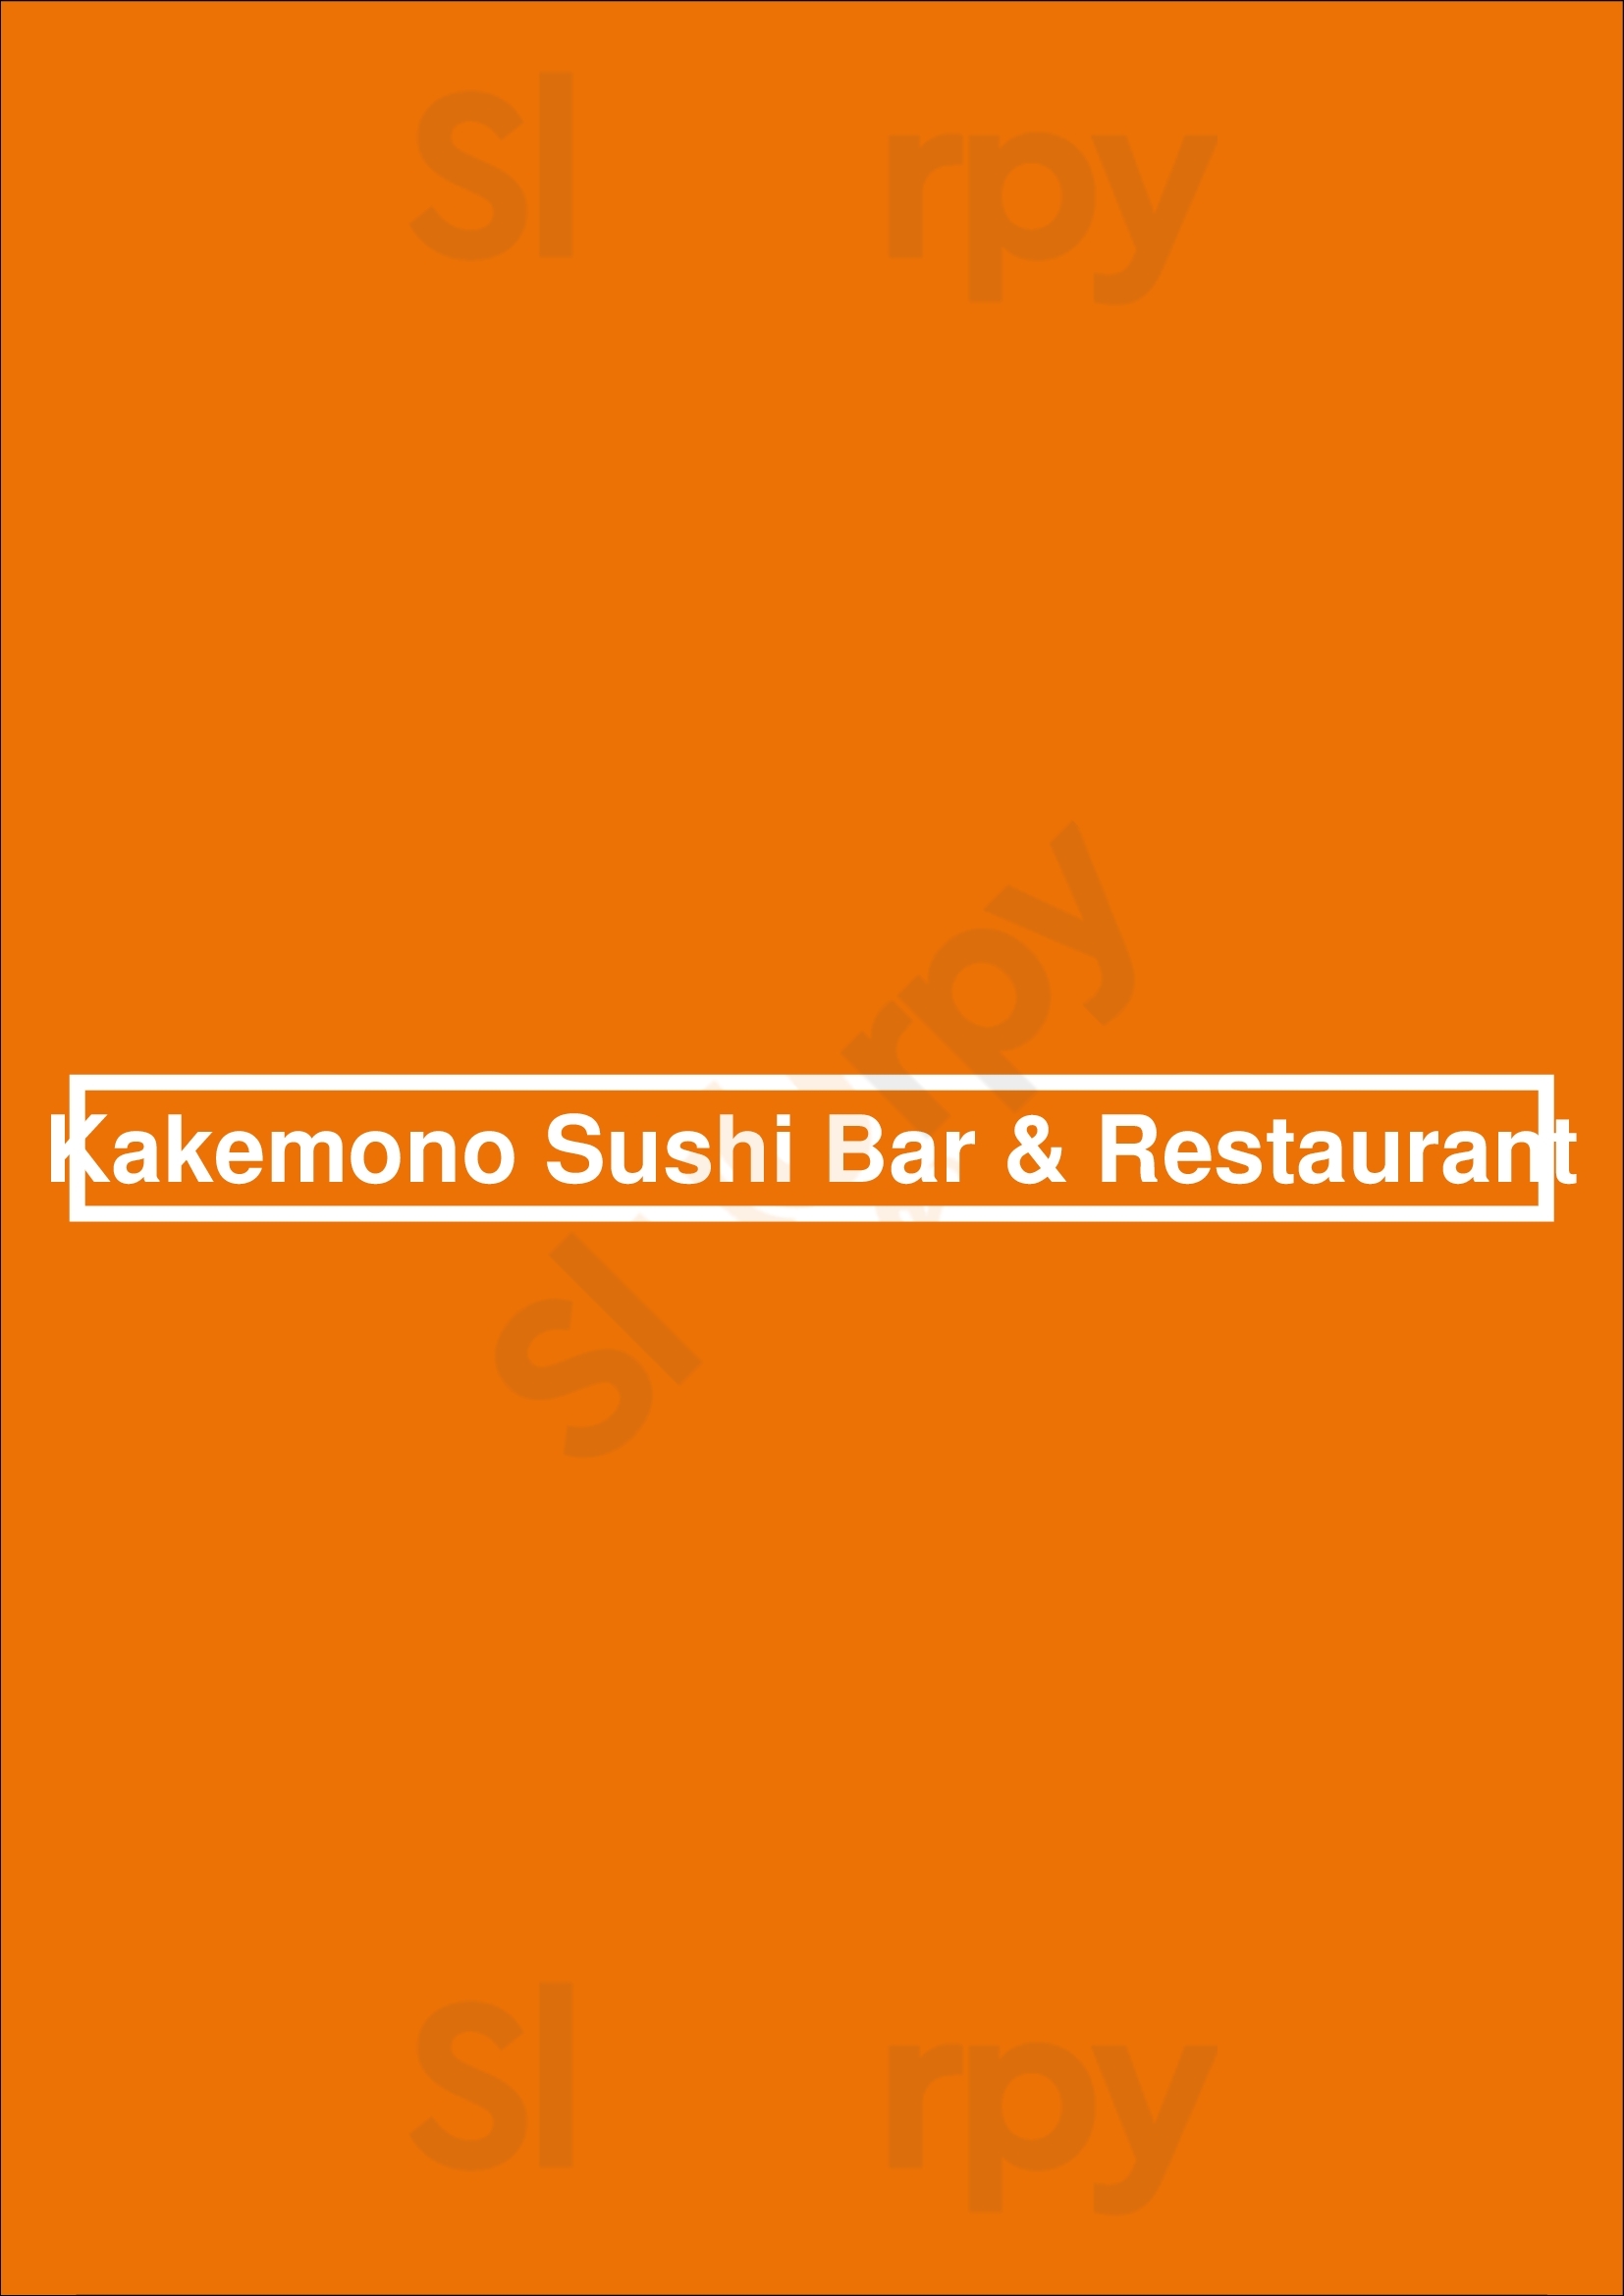 Kakemono Sushi Bar & Restaurant Oshawa Menu - 1